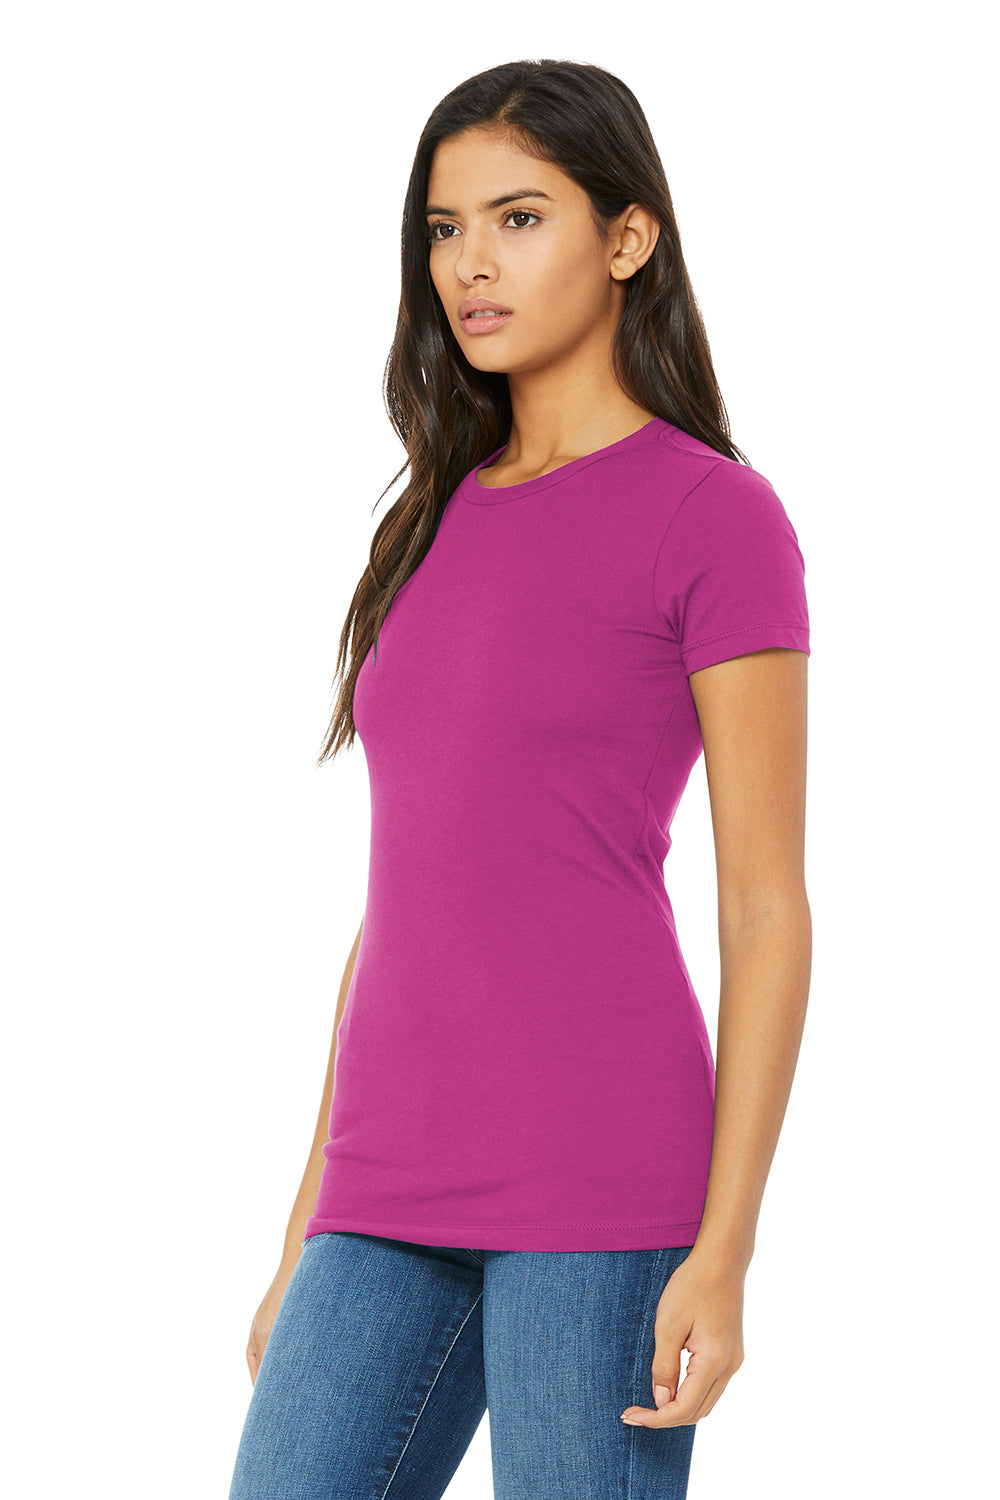 Bella + Canvas BC6004/6004 Womens The Favorite Short Sleeve Crewneck T-Shirt Berry Pink Model 3Q